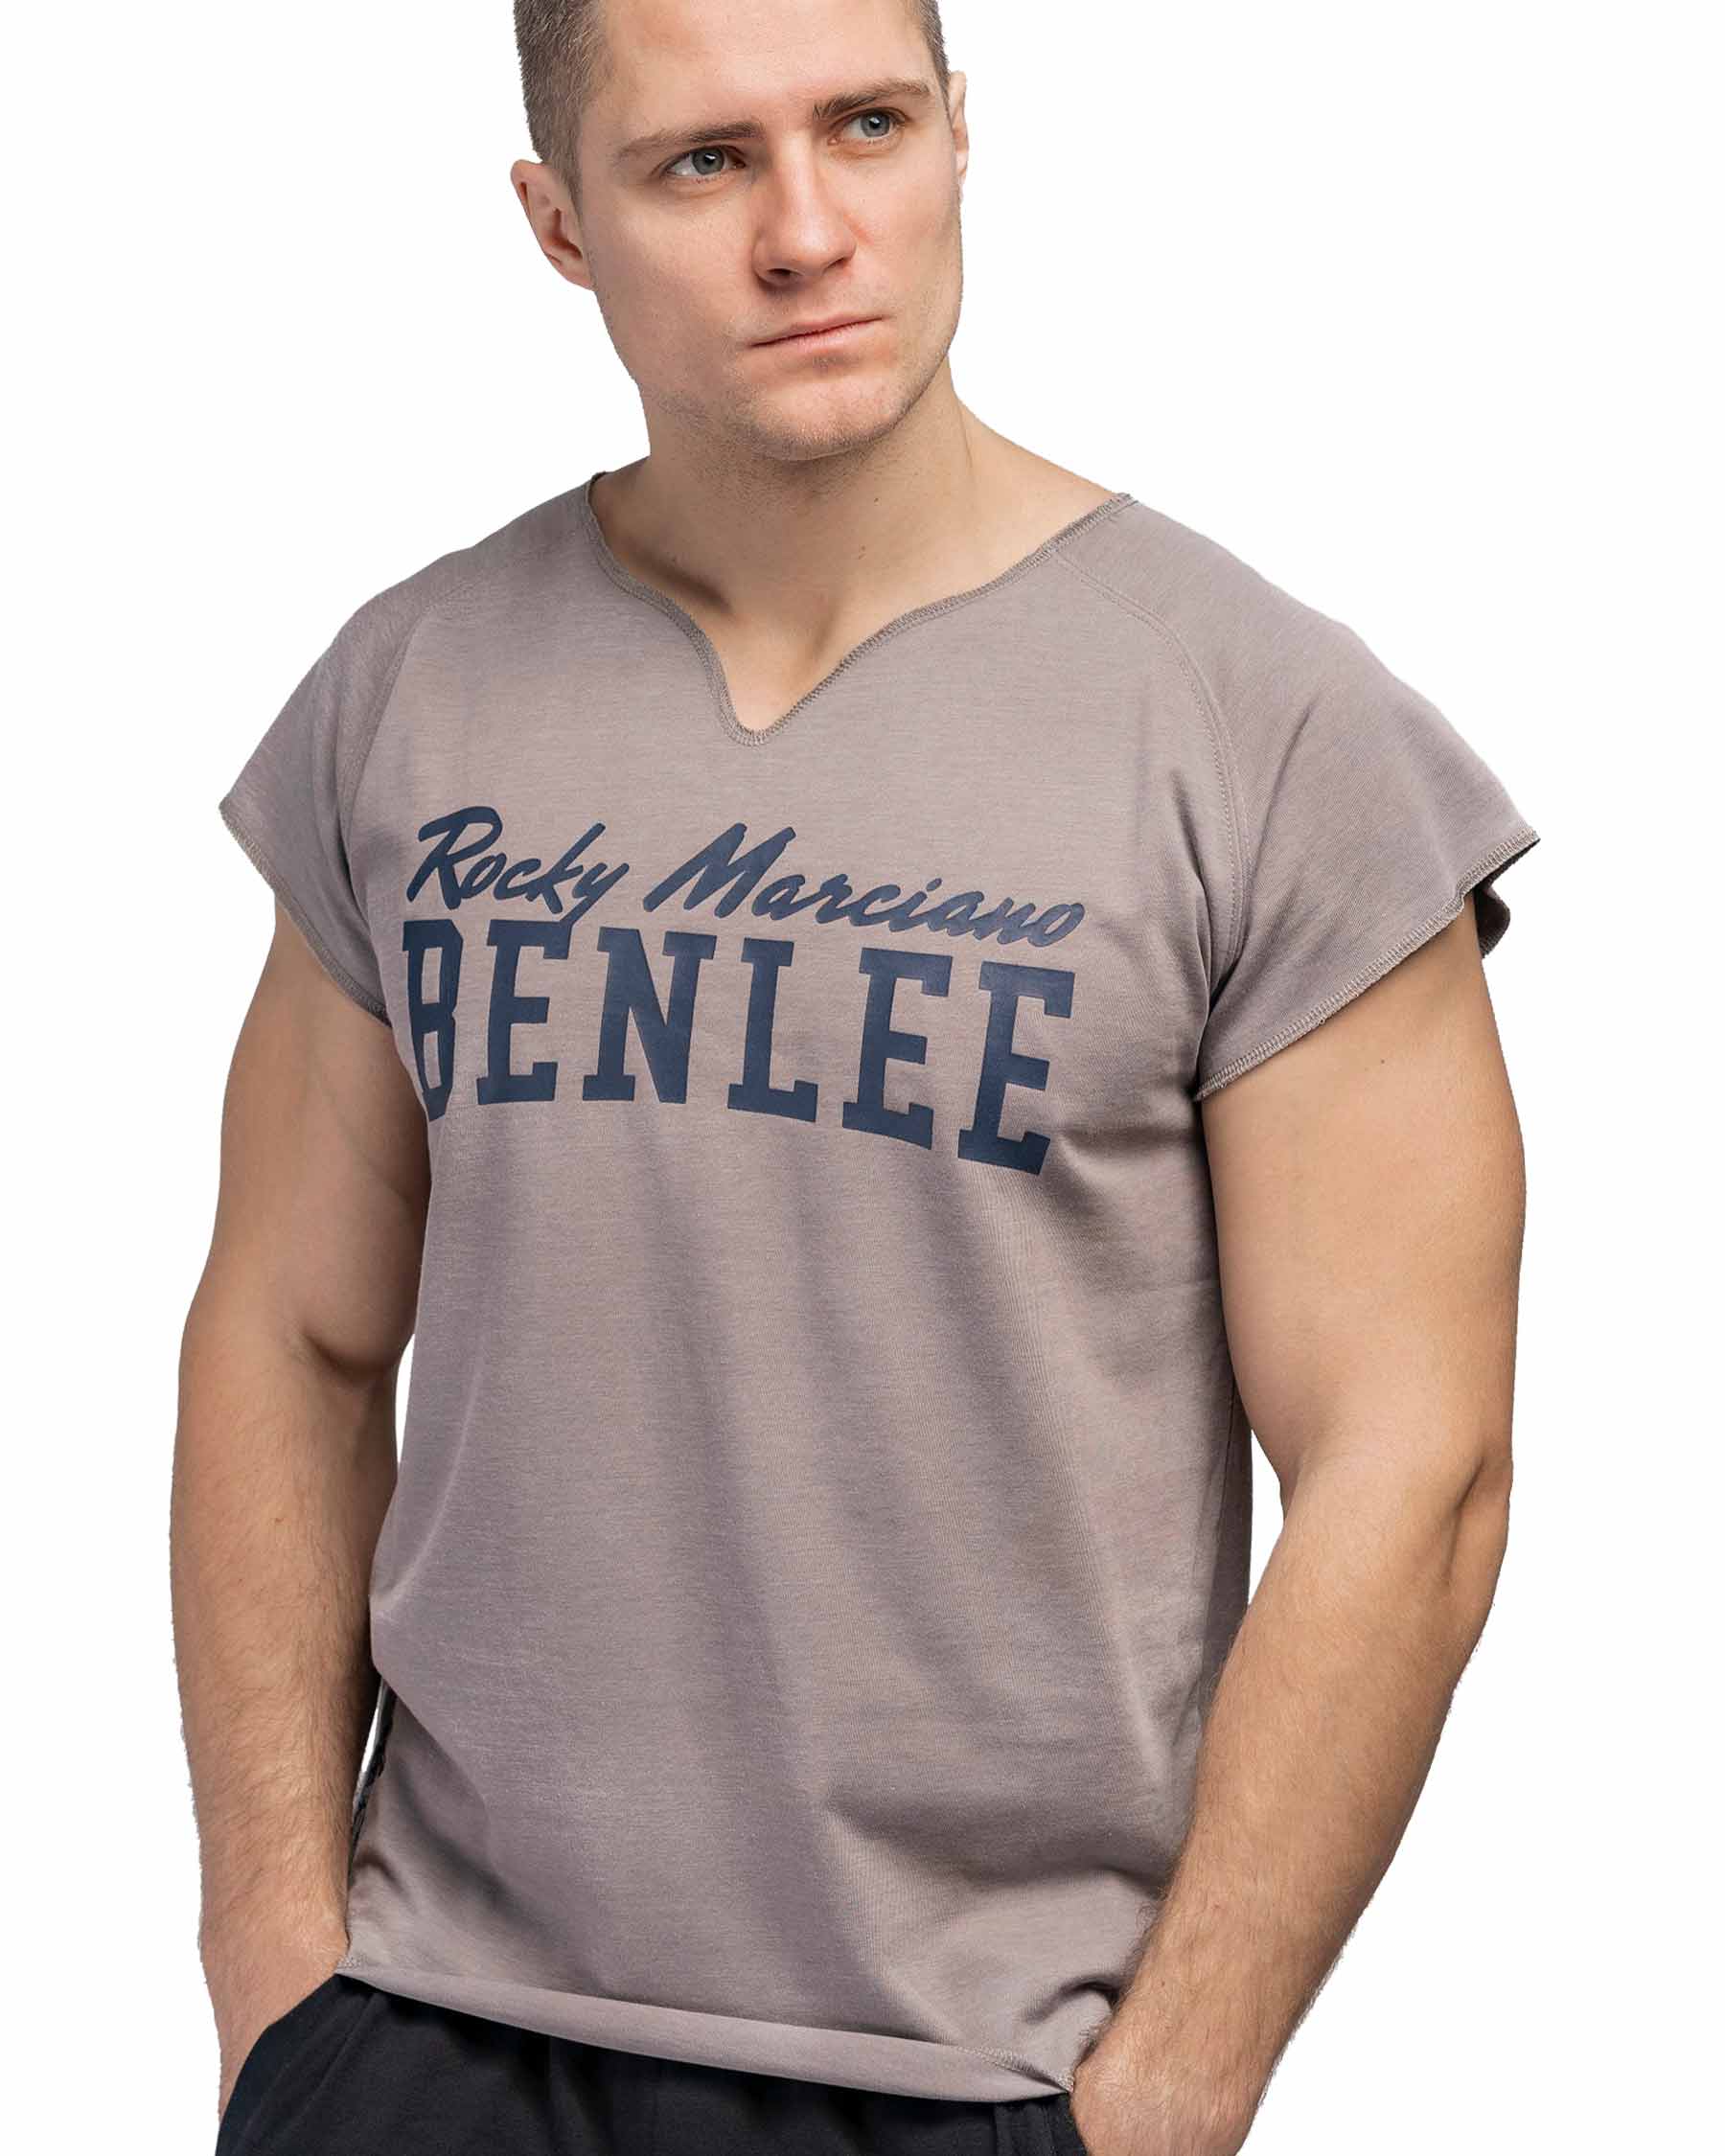 Odds Phobia humane BenLee Muscle shirt Edwards - Herren T-Shirt - BenLee Boxsport und  Sportswear